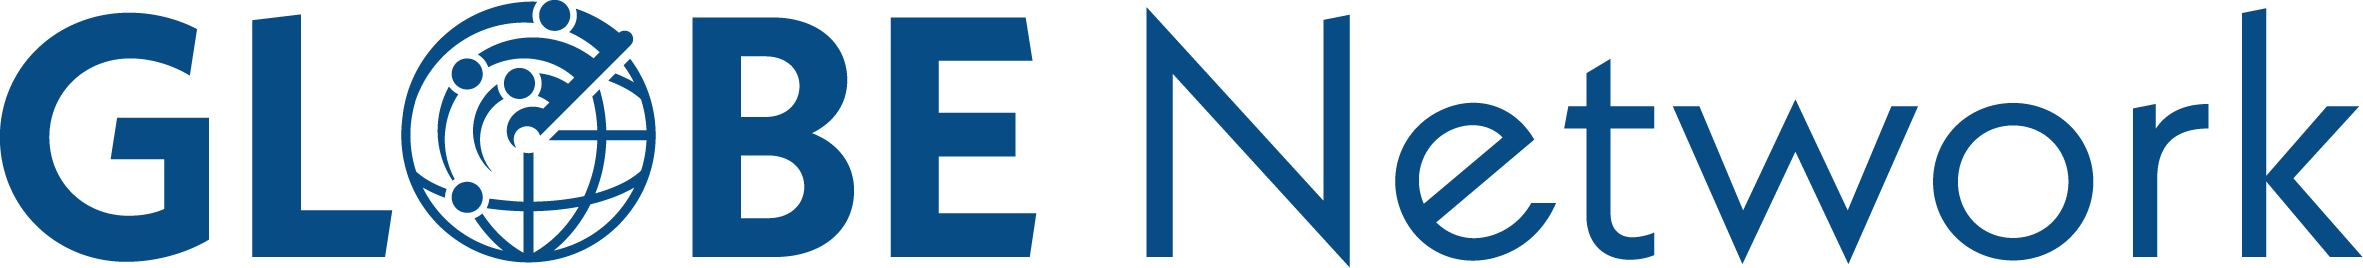 GlobE Network logo